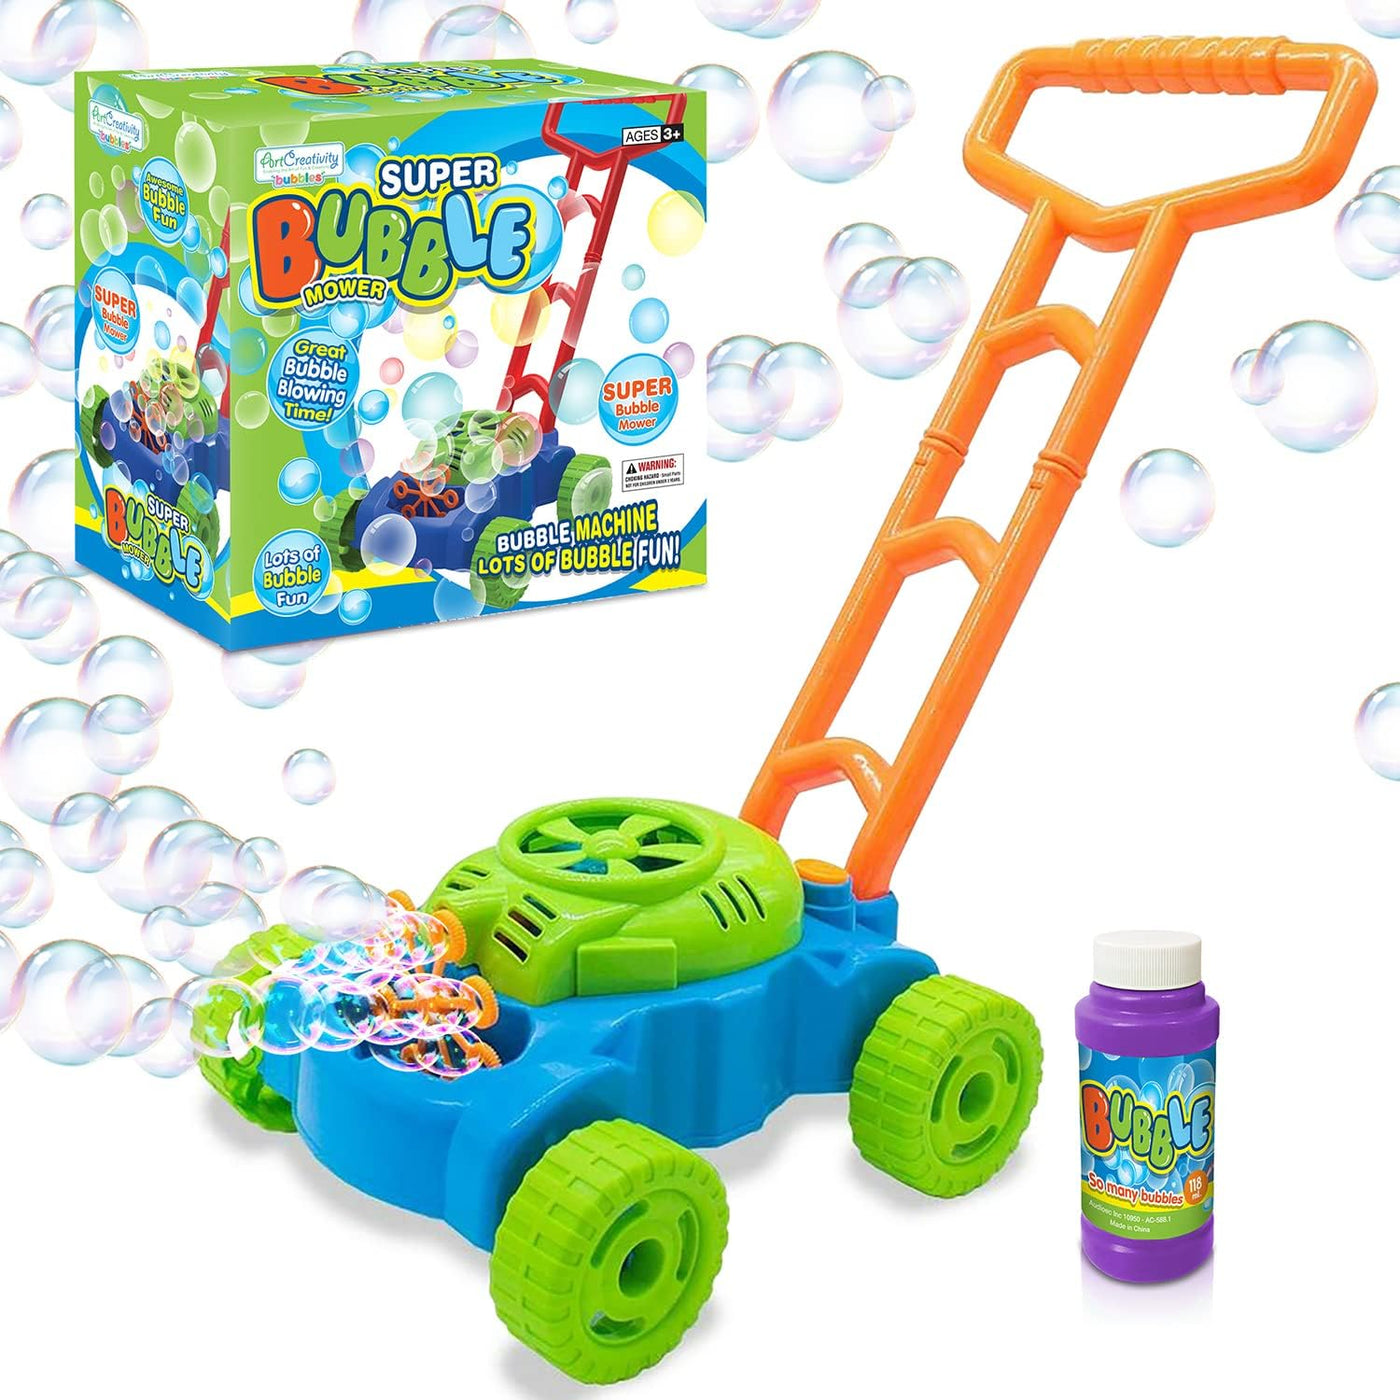 Pupu Pig Bubble Lawn Mower, Pink Bubbles Blower Machine for